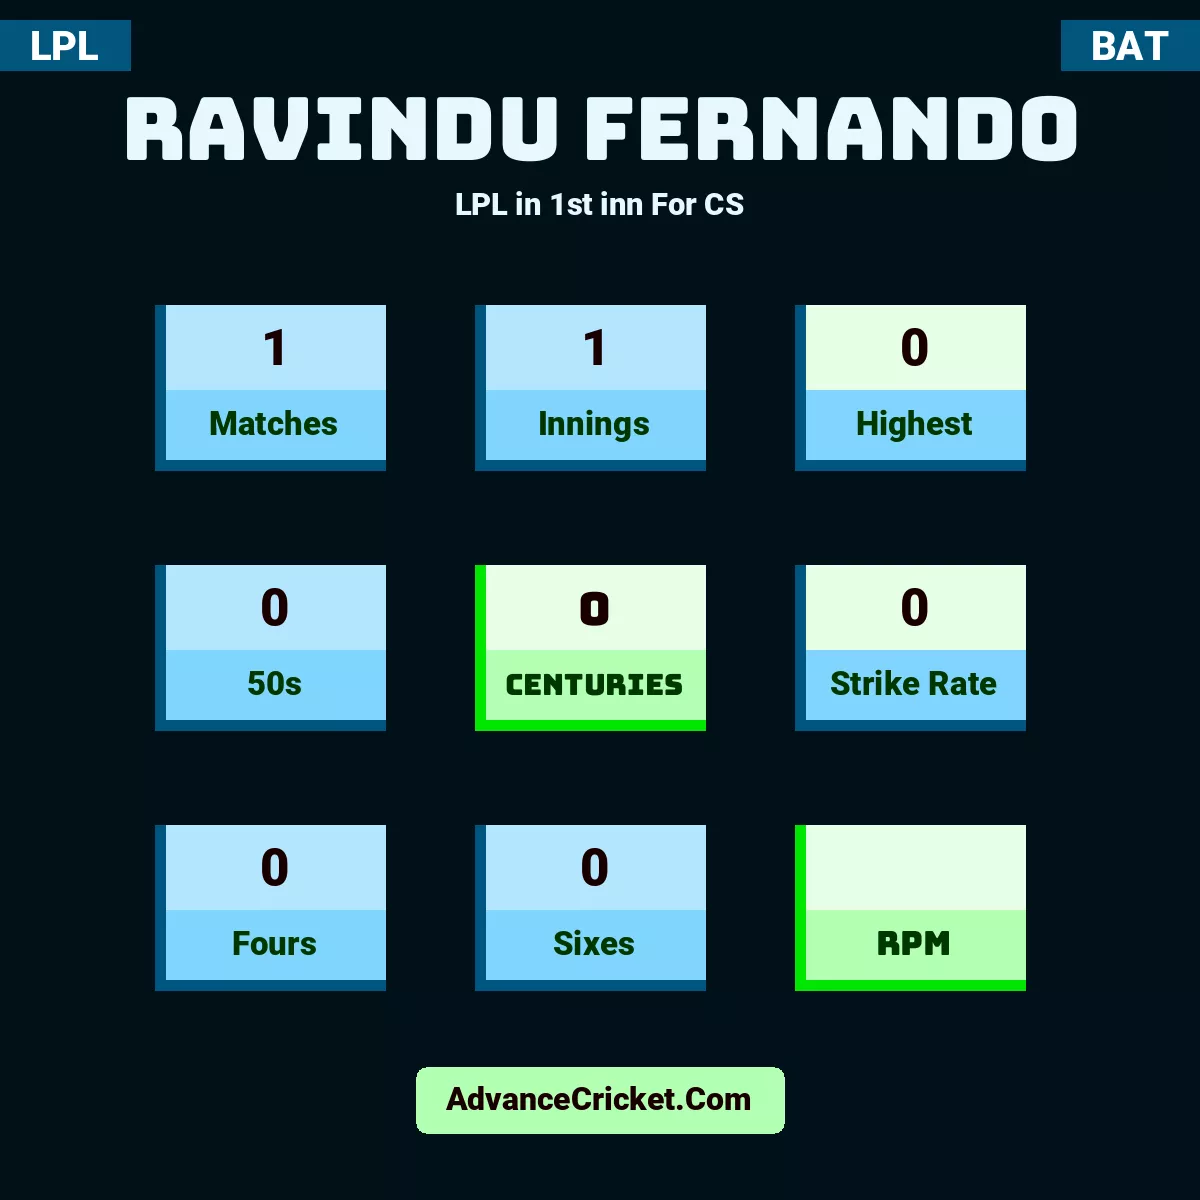 Ravindu Fernando LPL  in 1st inn For CS, Ravindu Fernando played 1 matches, scored 0 runs as highest, 0 half-centuries, and 0 centuries, with a strike rate of 0. R.Fernando hit 0 fours and 0 sixes.